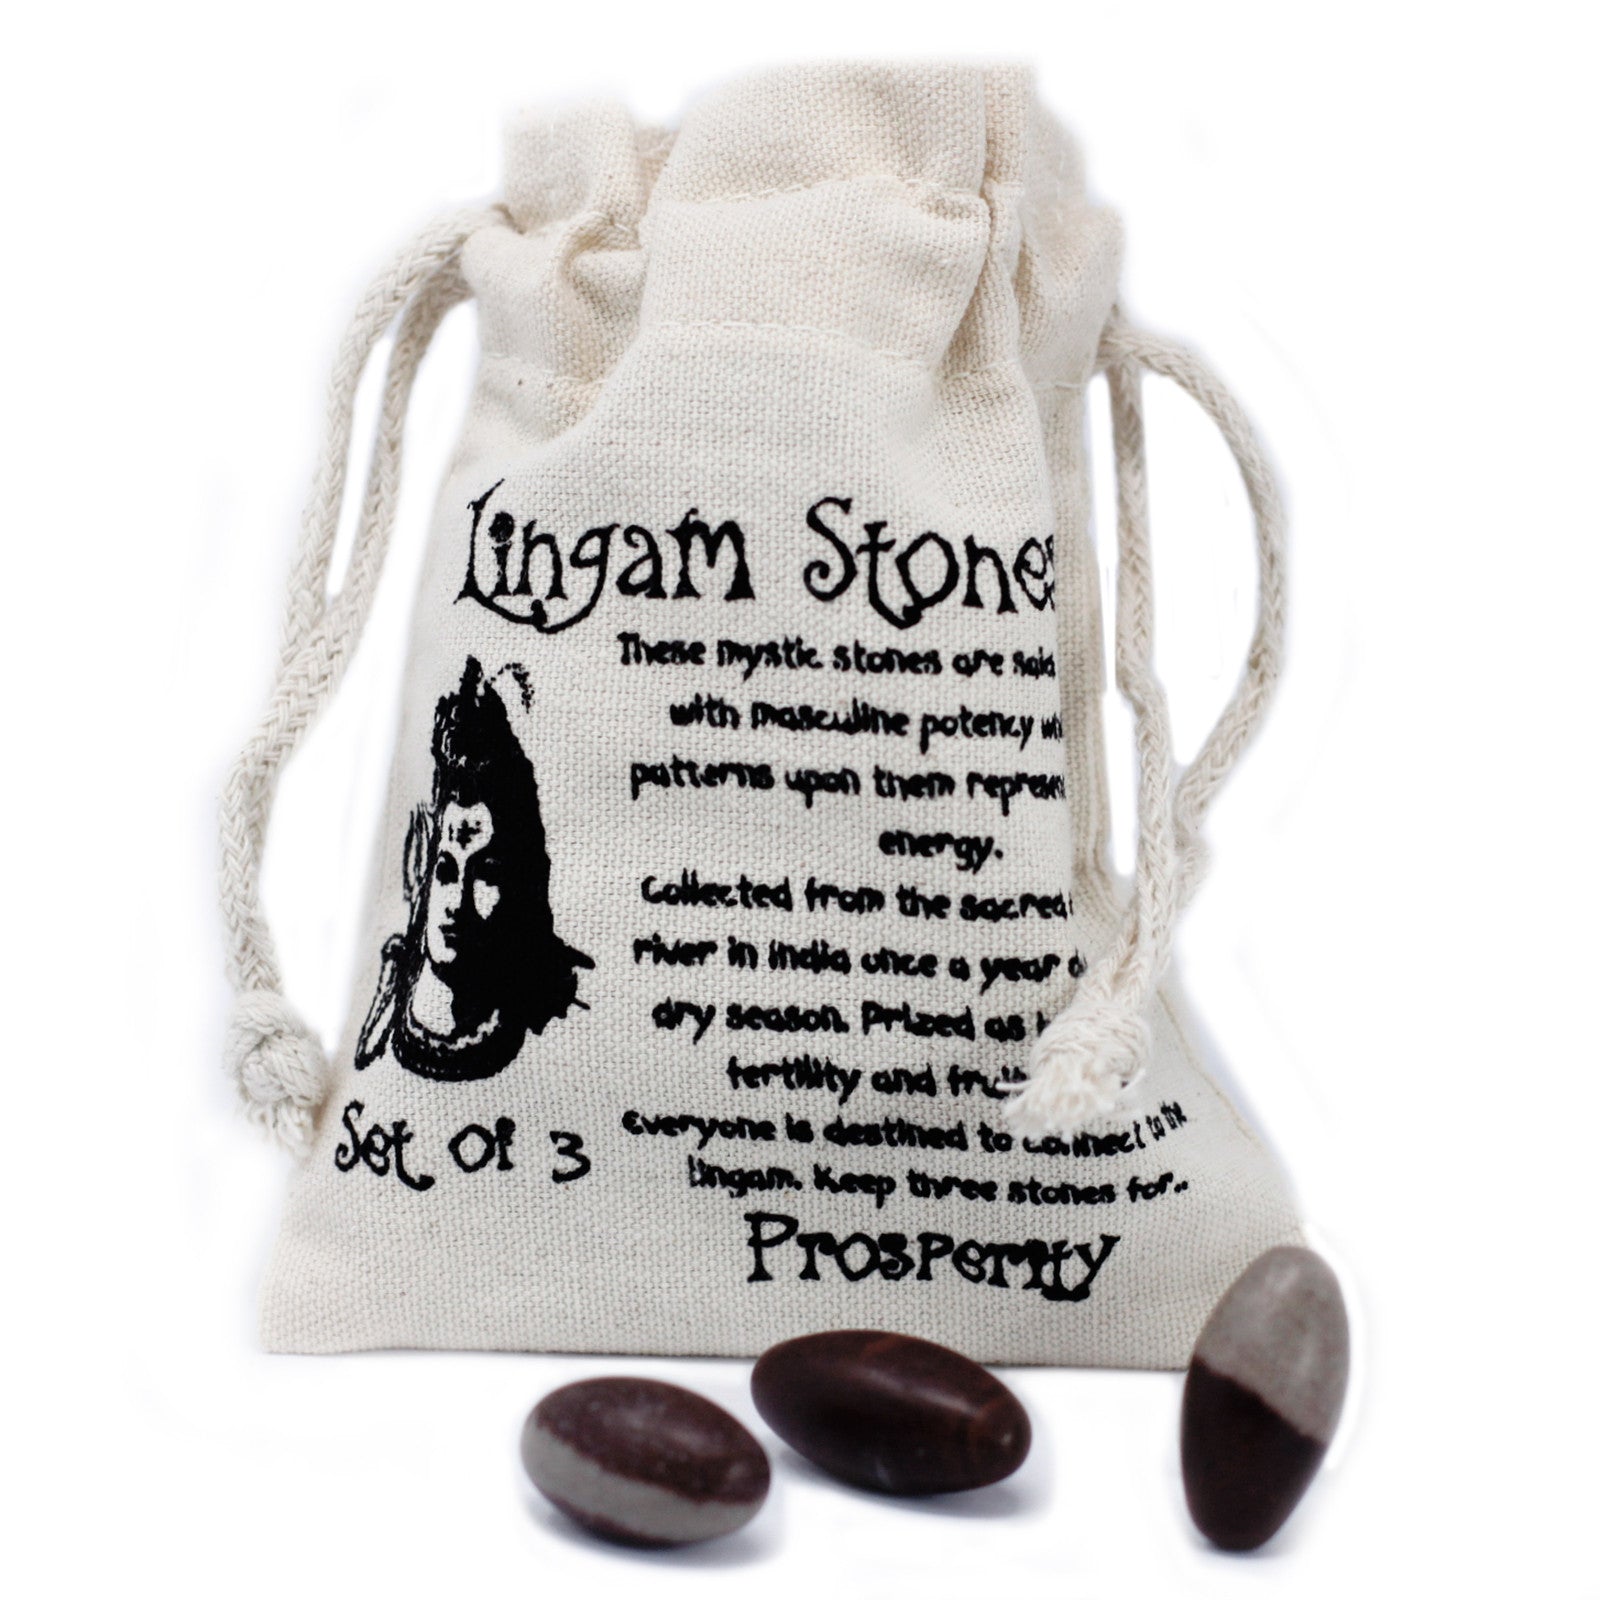 One Inch Shiva Lingam 3 Stones - Prosperity